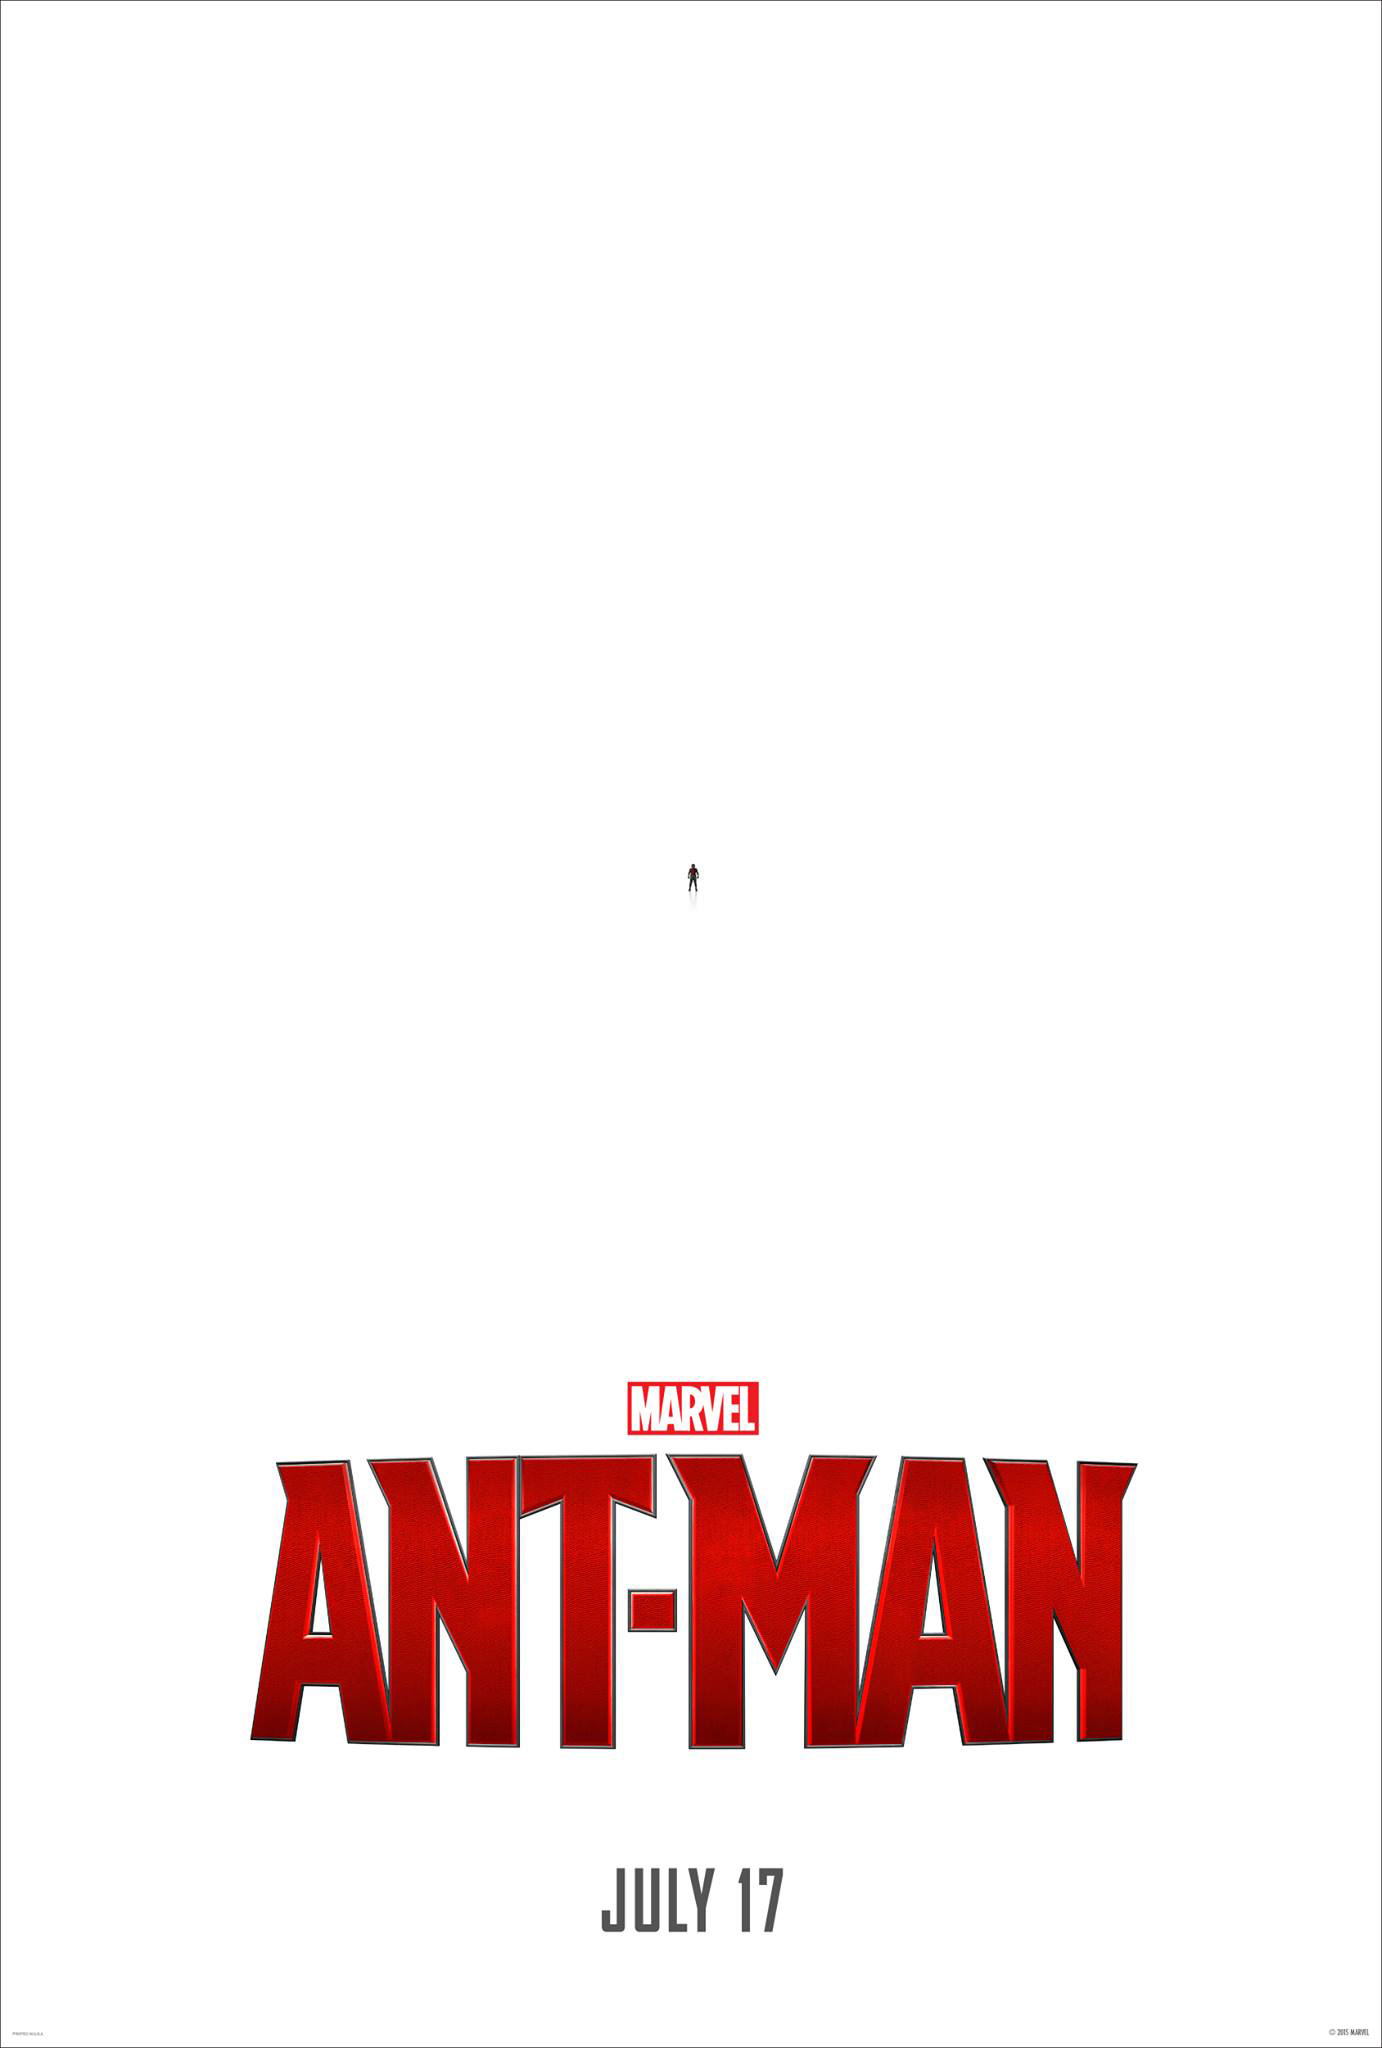 #7 Ant-Man (Marvel/Disney)